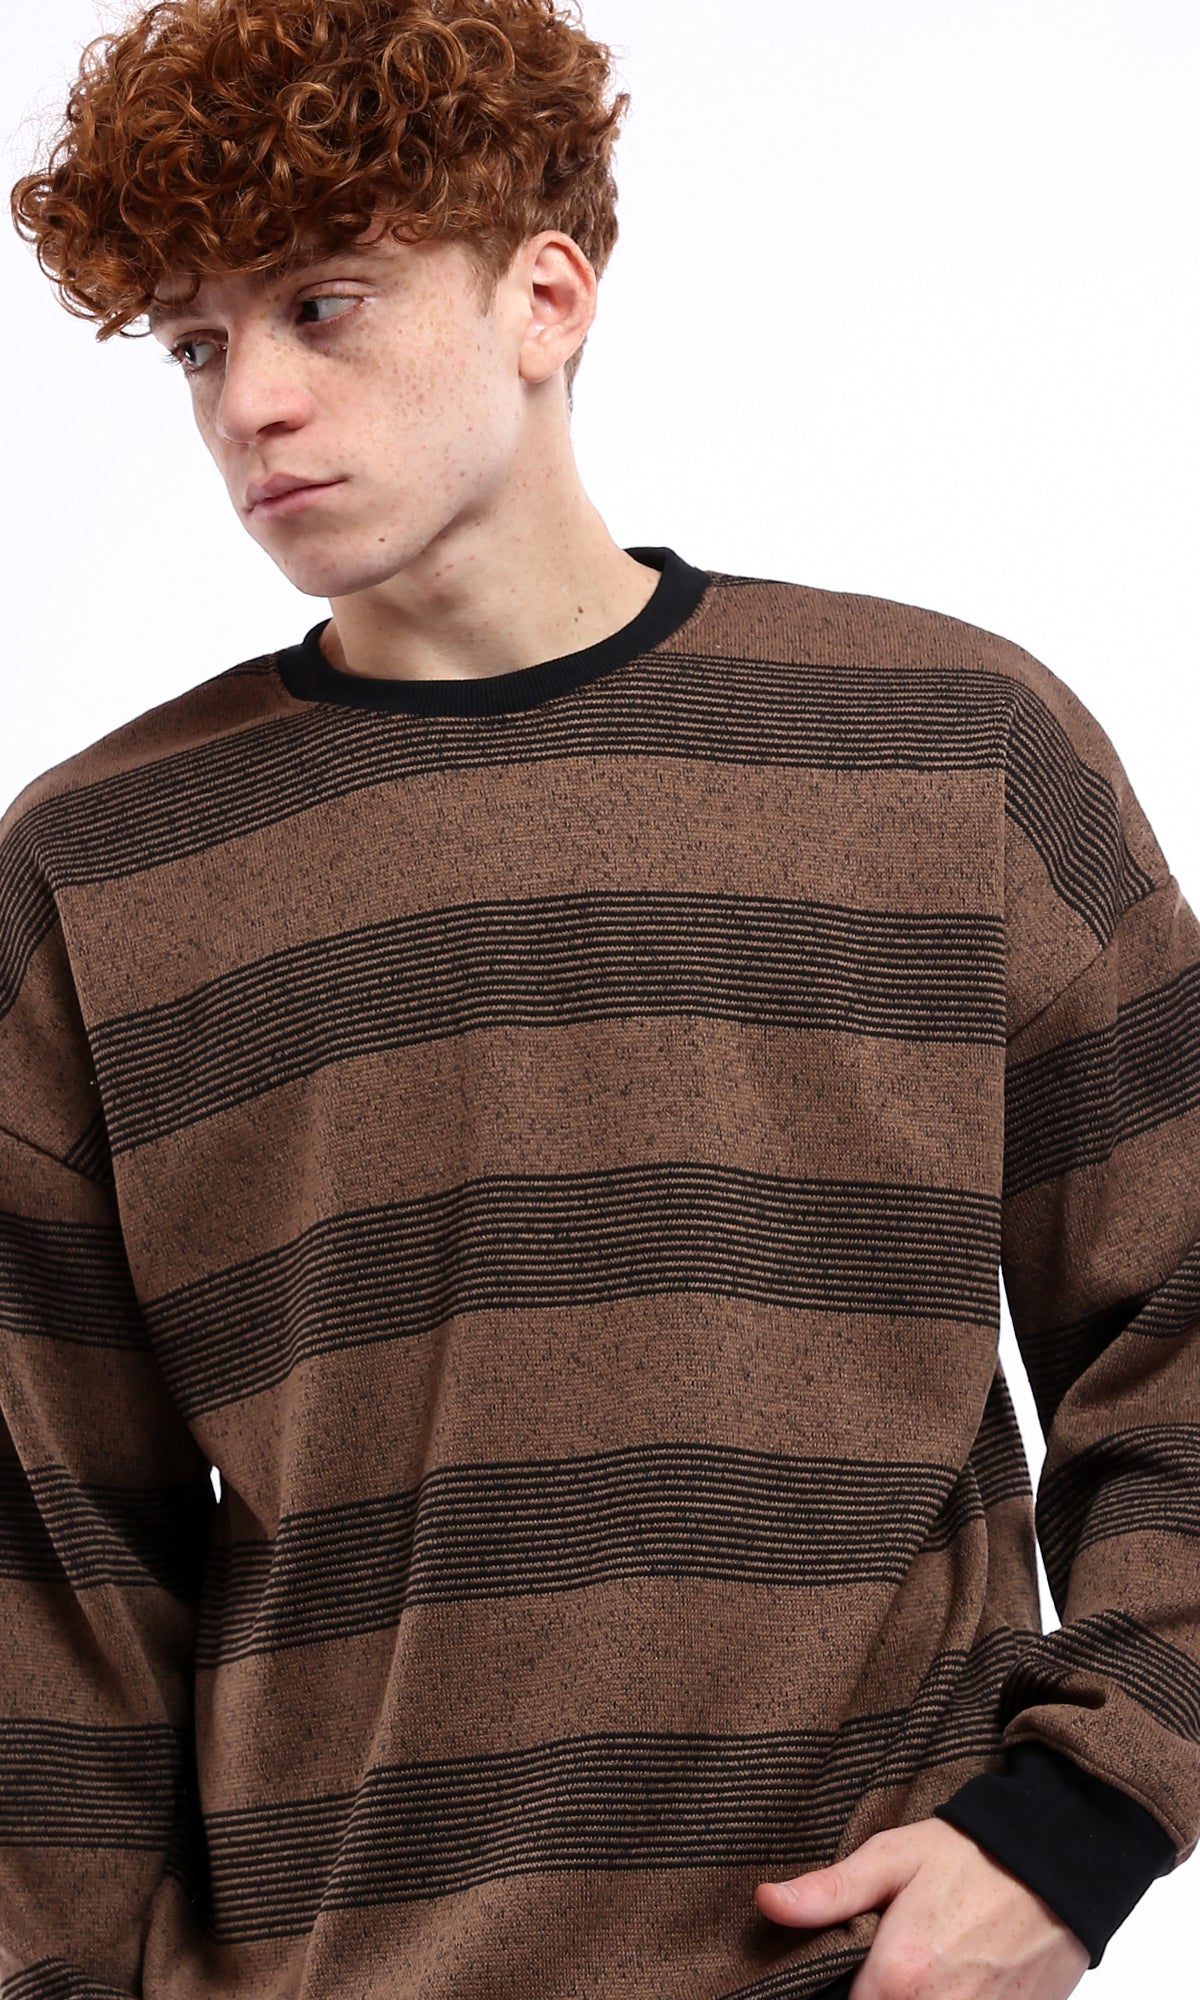 O177882 Light Brown & Black Striped Slip On Sweatshirt